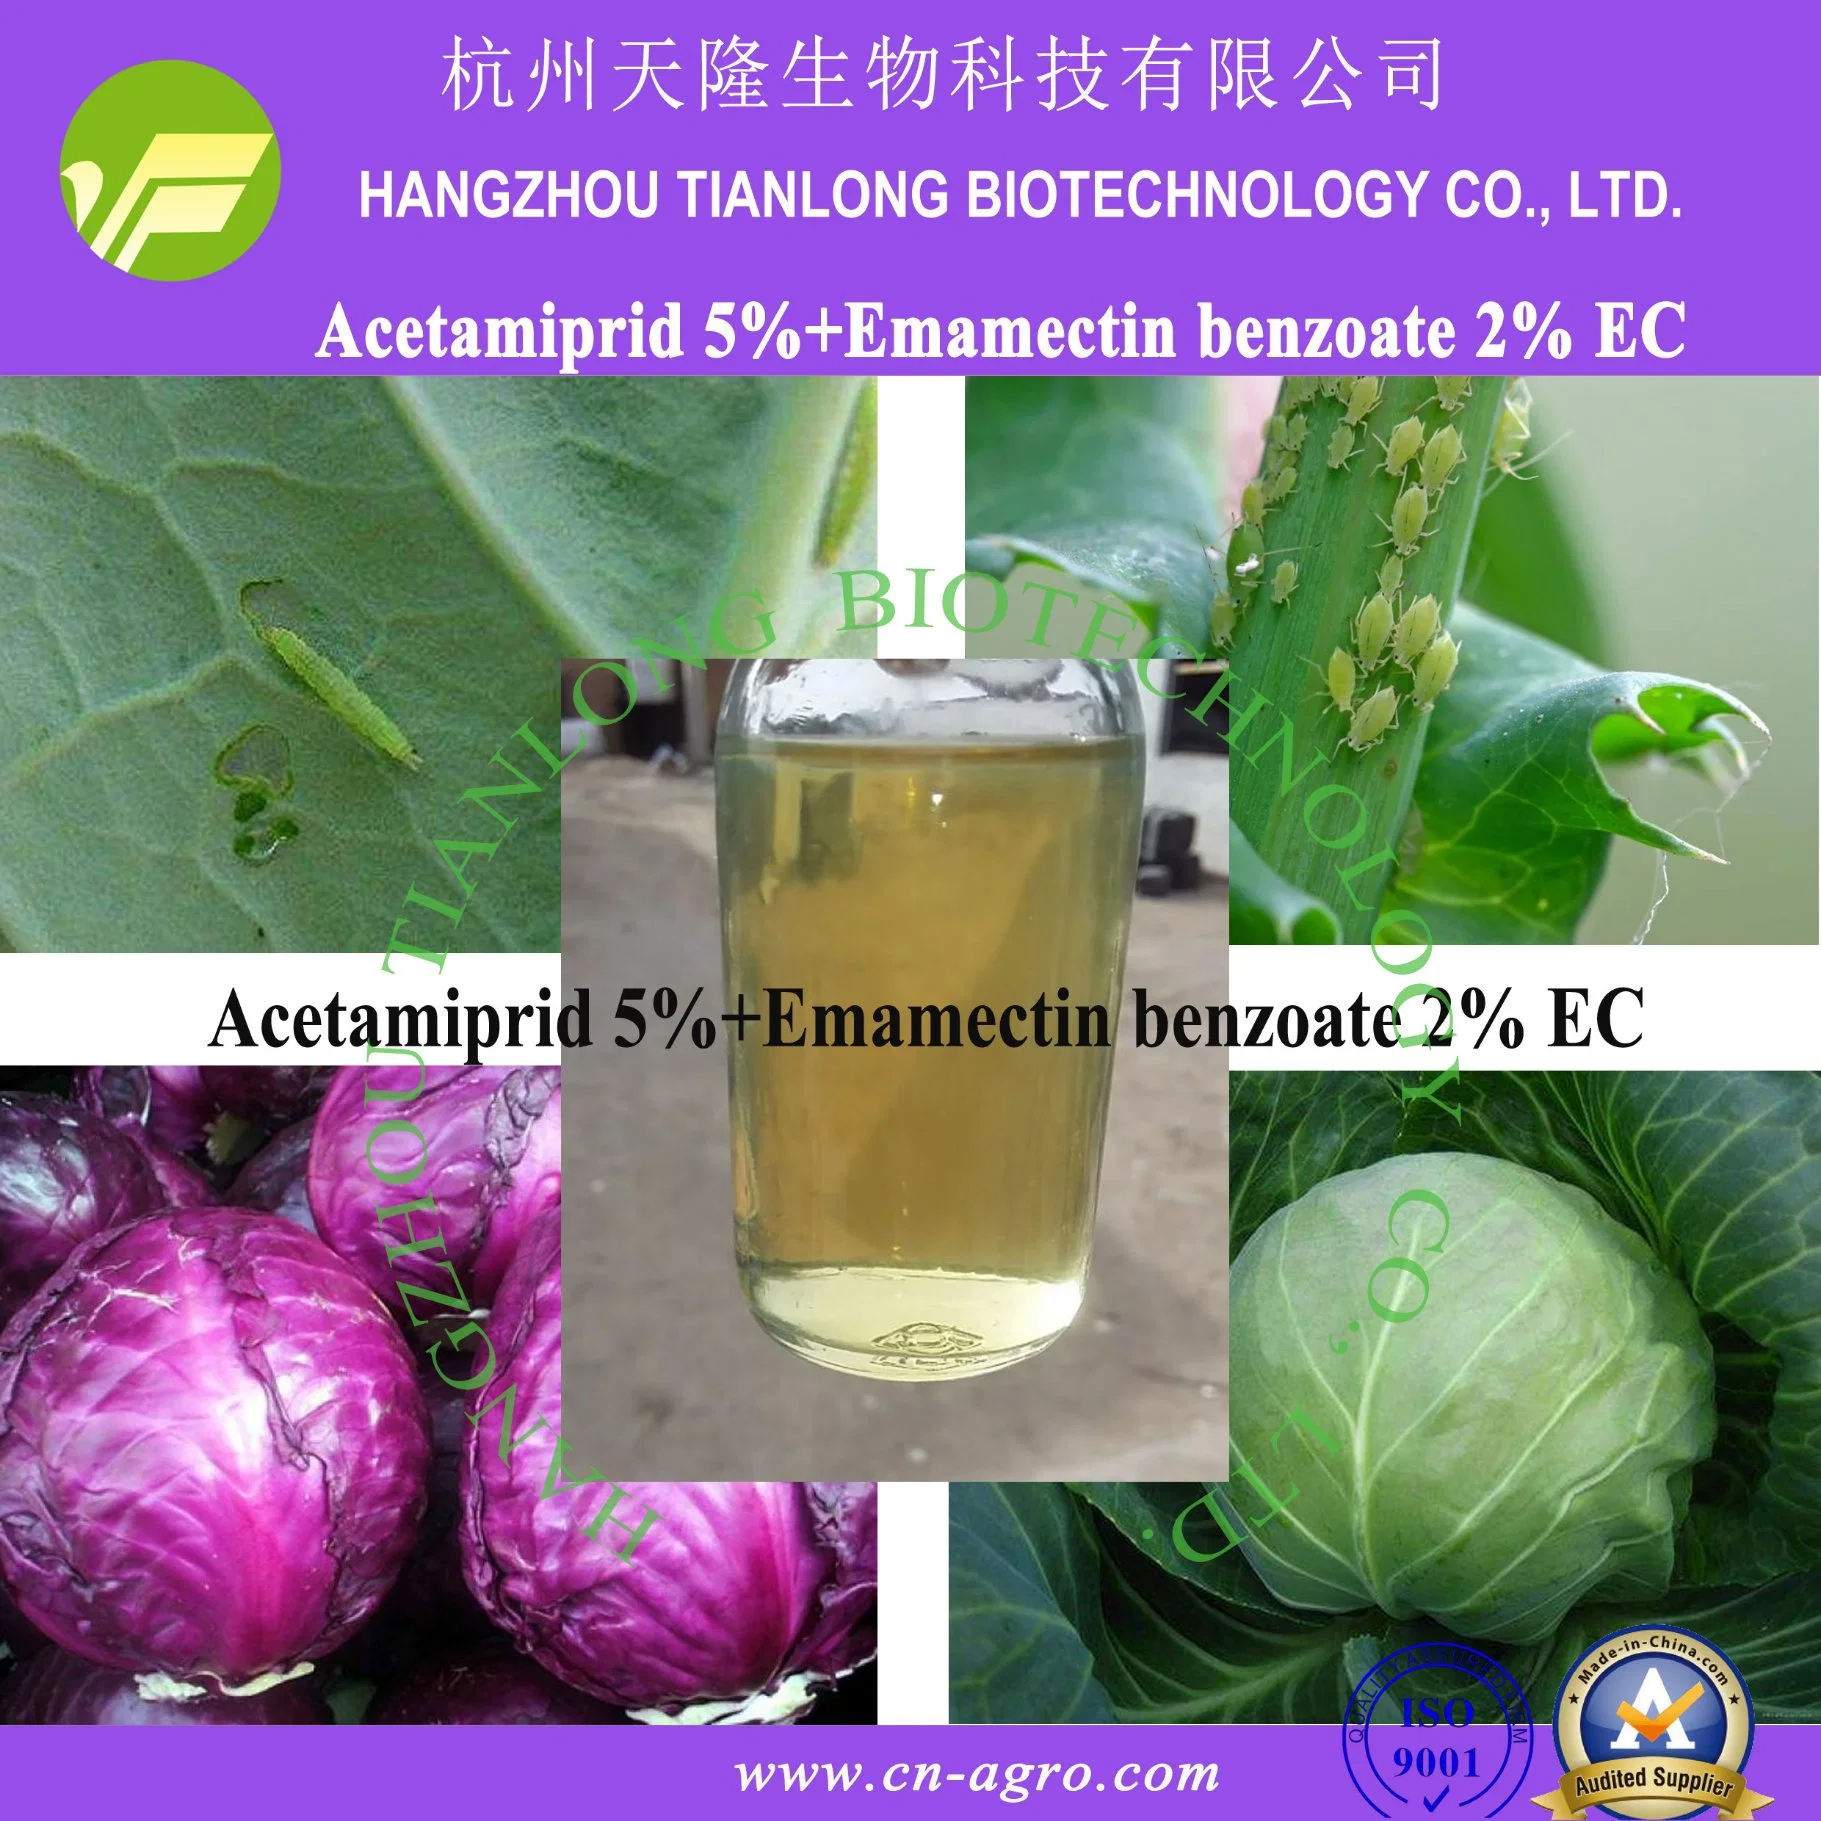 Acetamiprid 5%+Emamectin benzoate 2%EC-acetamiprid+emamectin benzoate (5%+2%)-Insecticide mixture